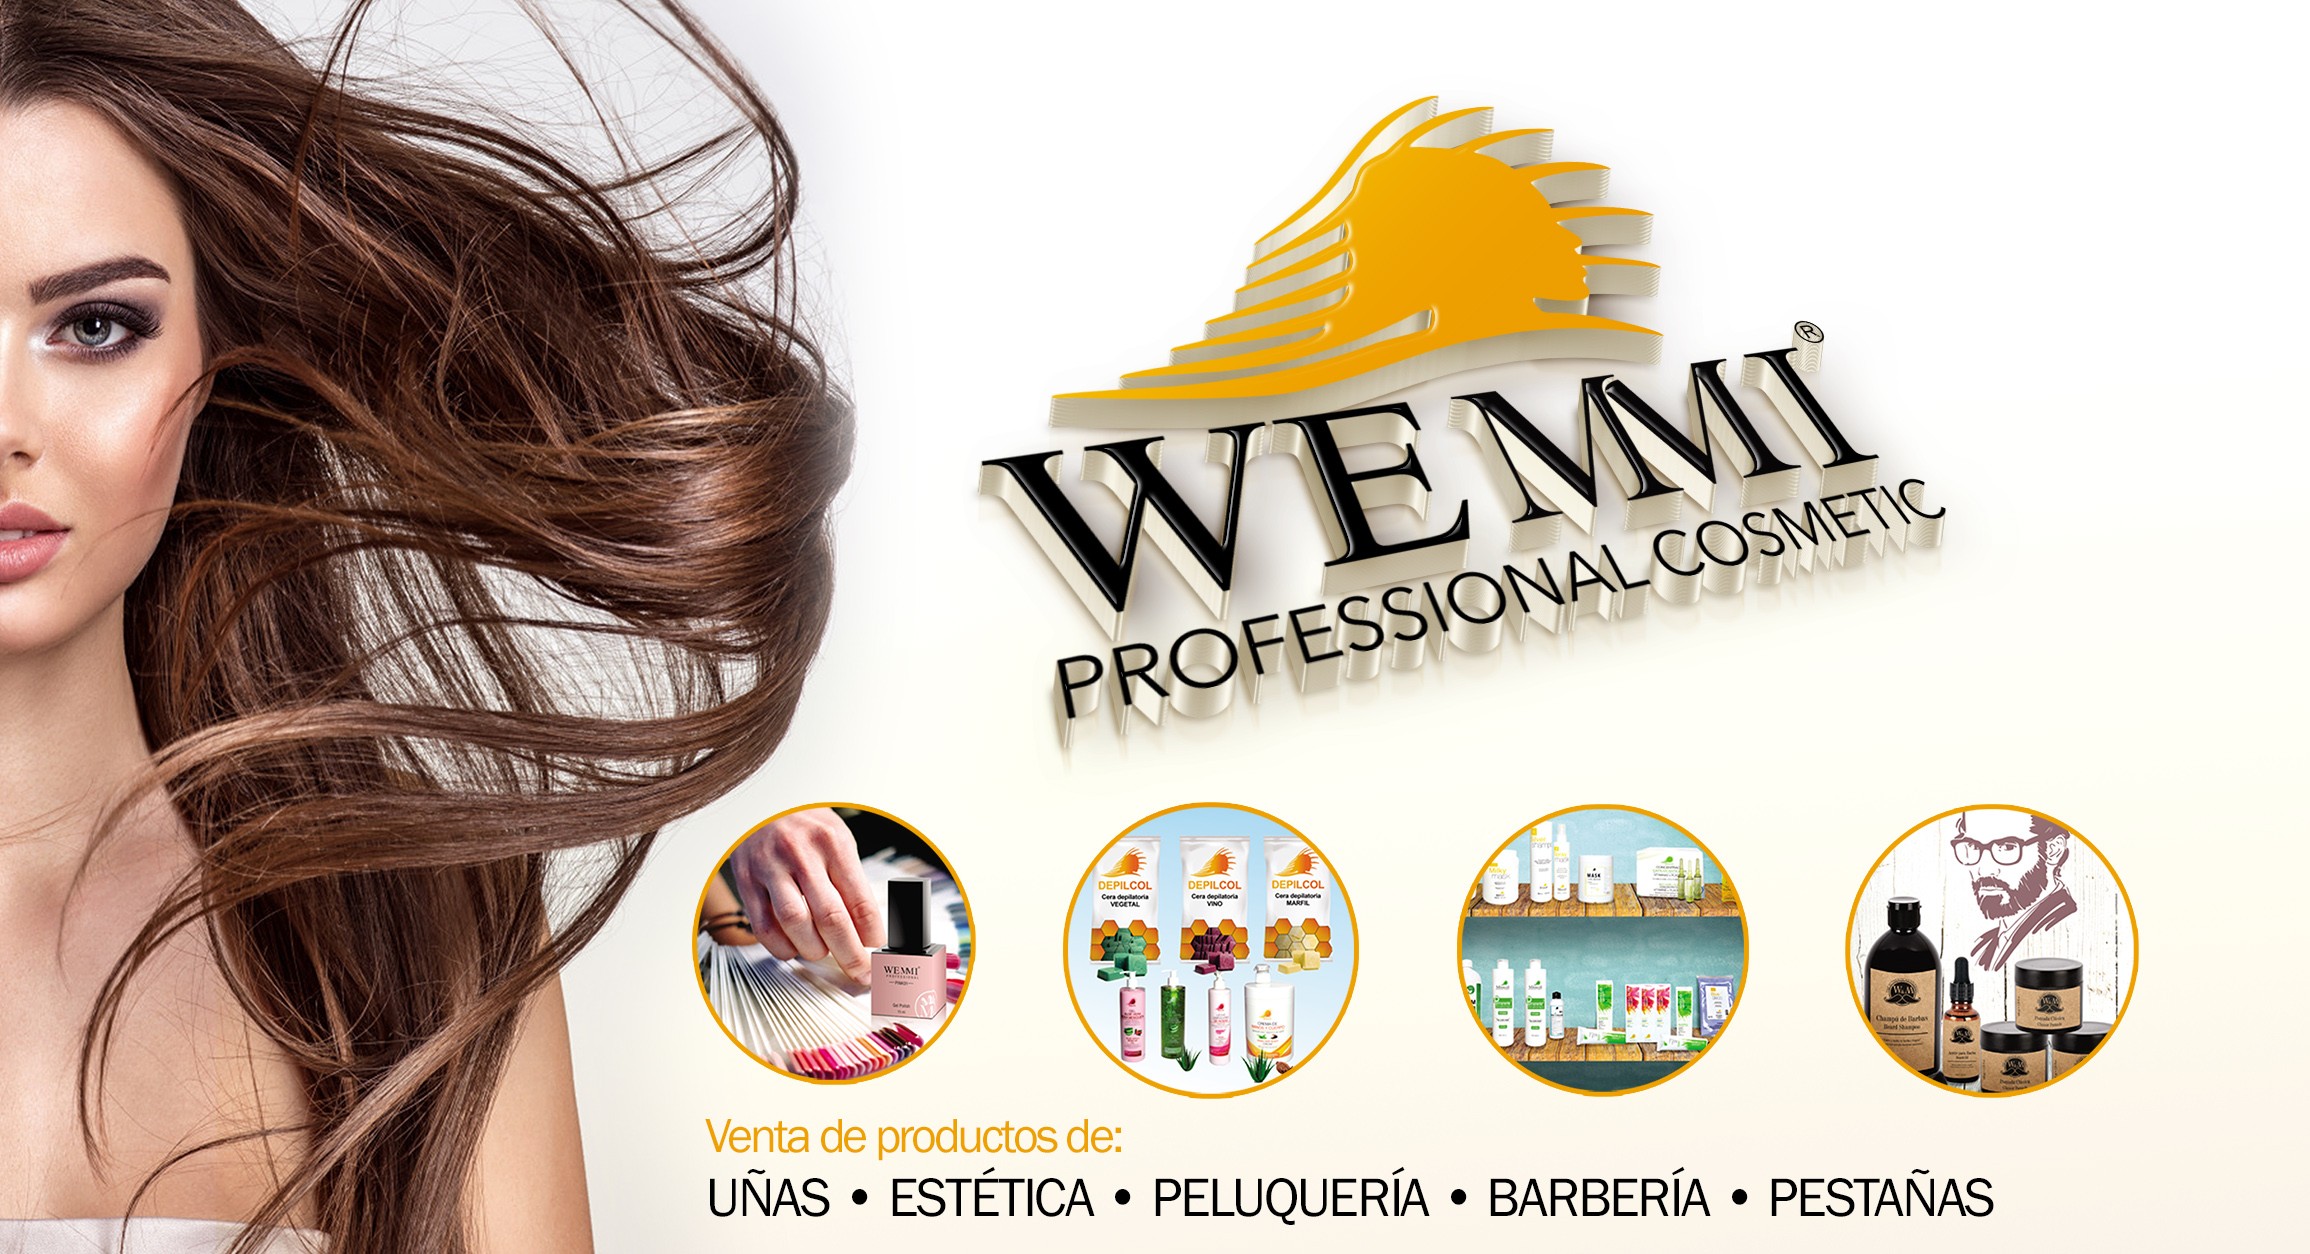 Wemmi Professional Cosmetics